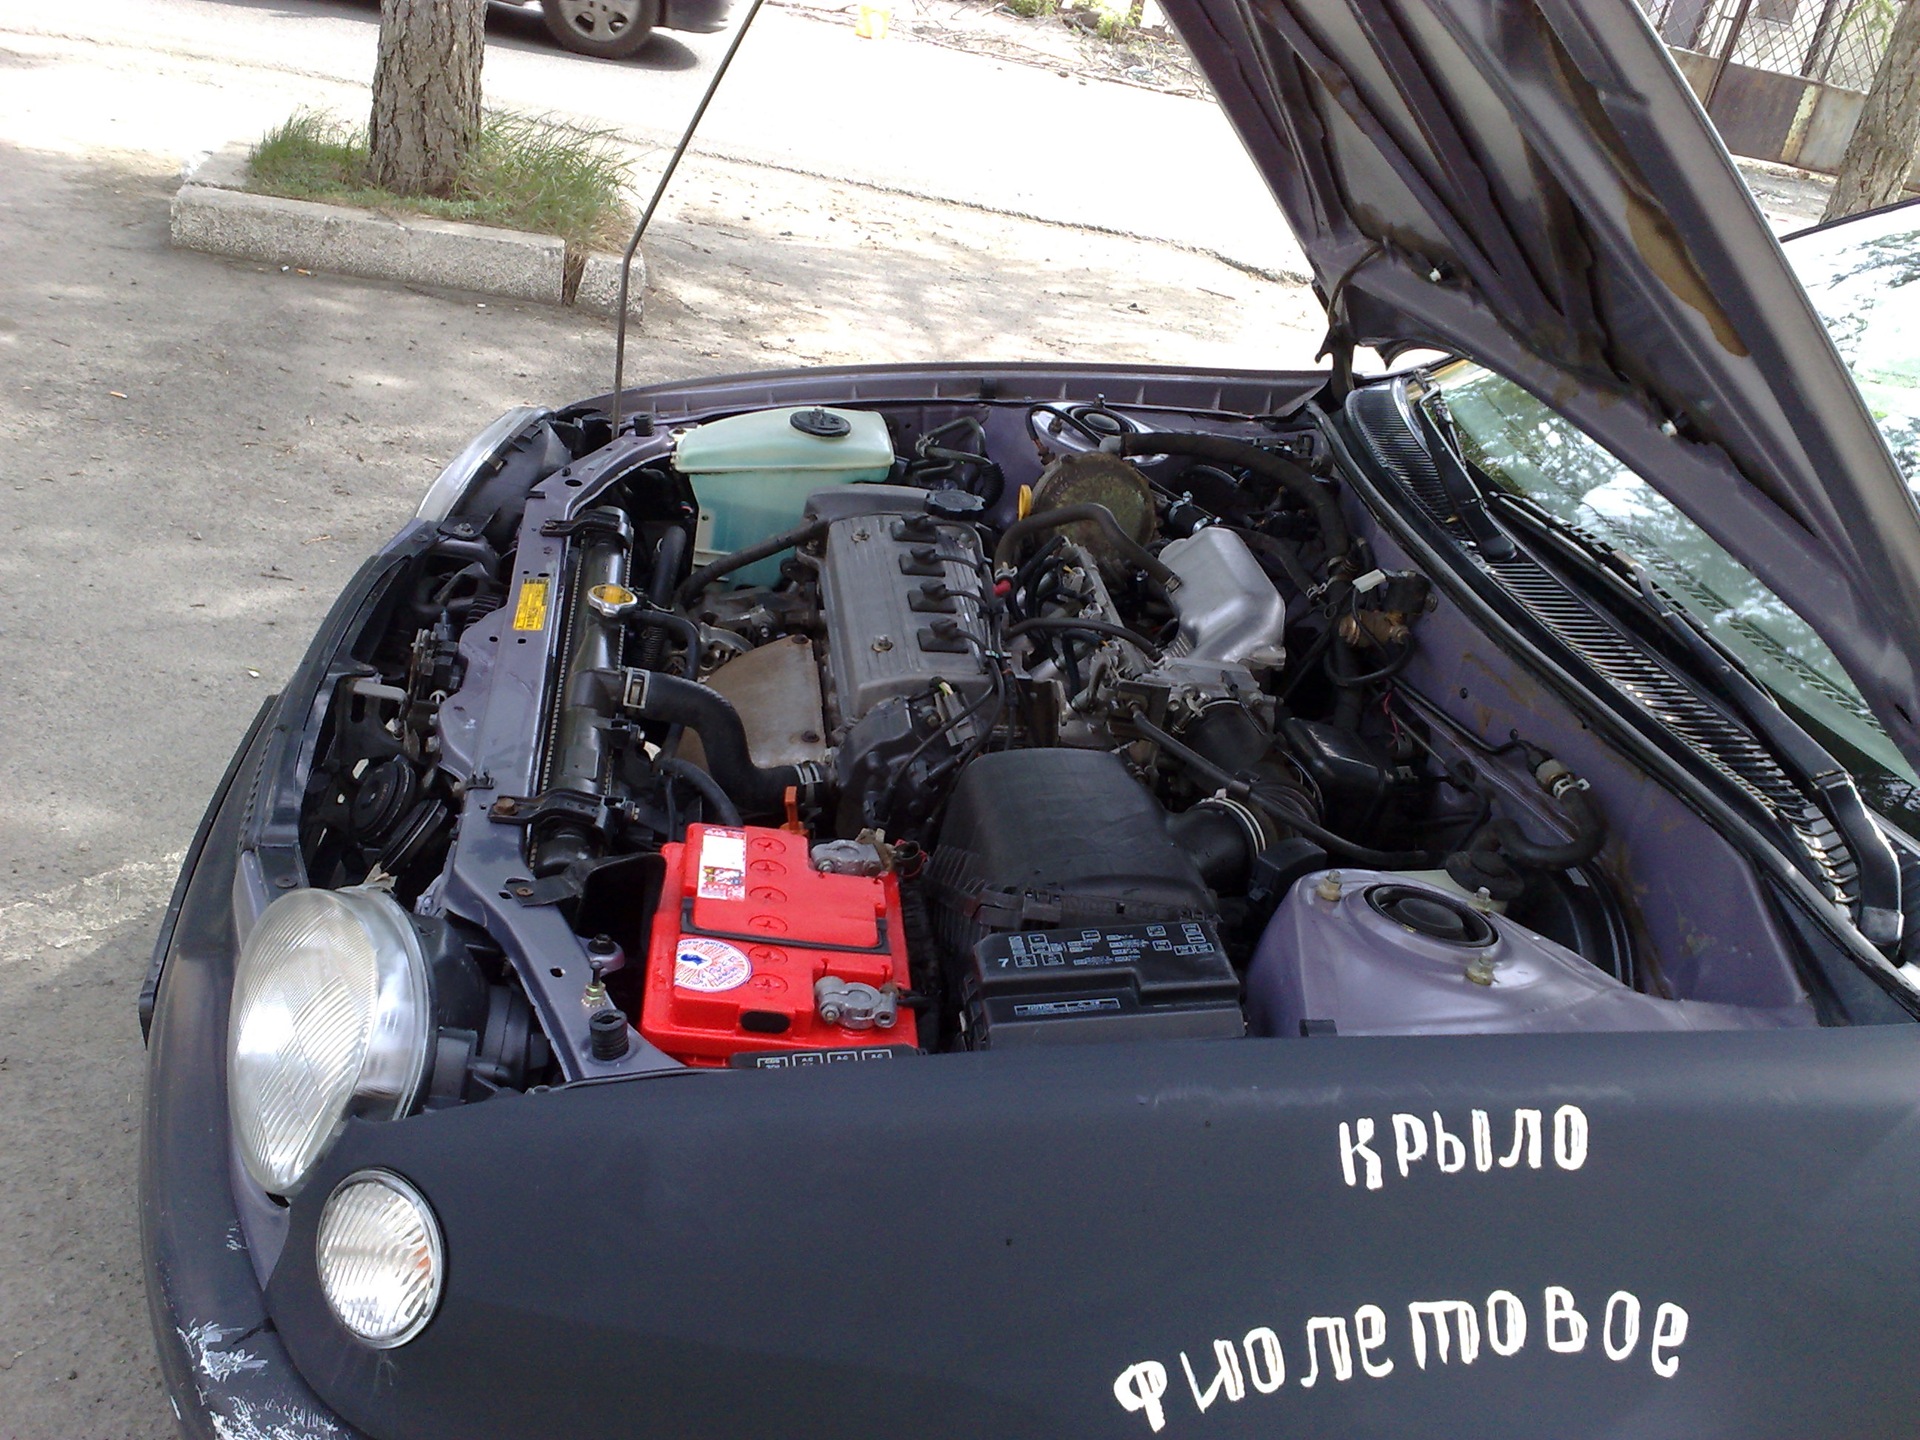 Washing the internal combustion engine  - Toyota Corolla 16 liter 1998